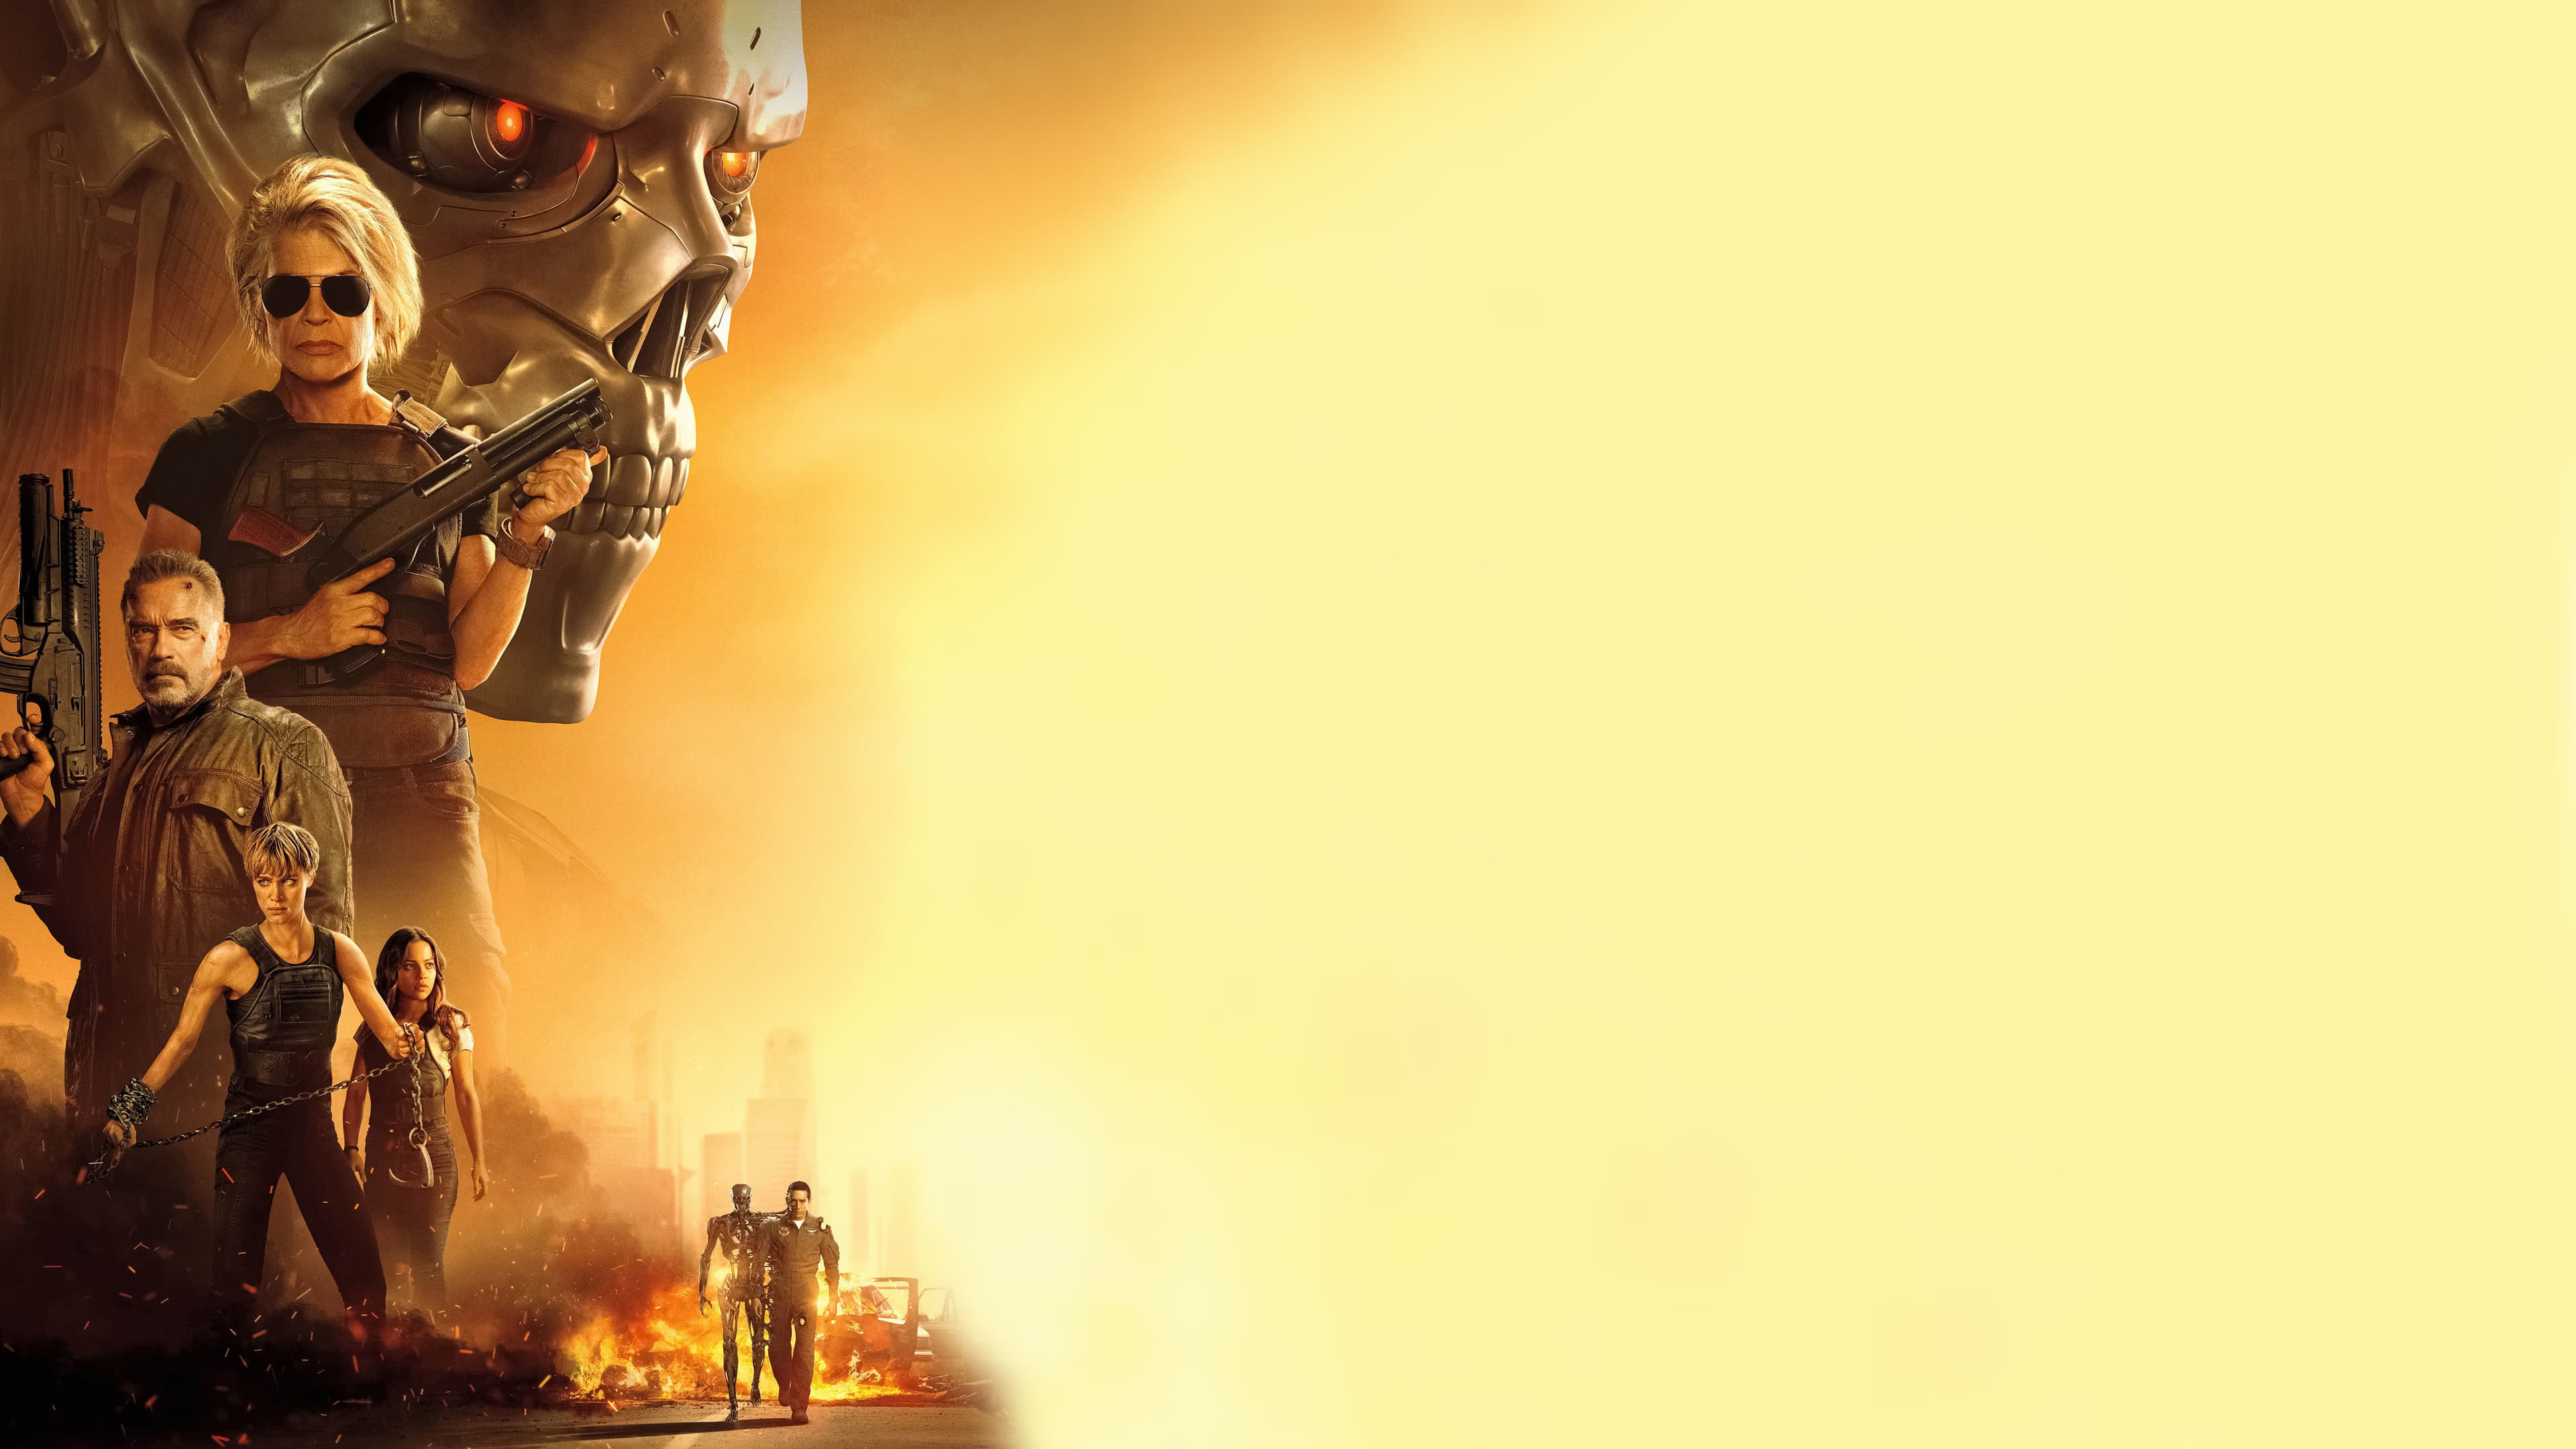 Terminator Dark Fate poster, UHD 4K wallpaper, Futuristic sci-fi, Action-packed sequel, 3840x2160 4K Desktop